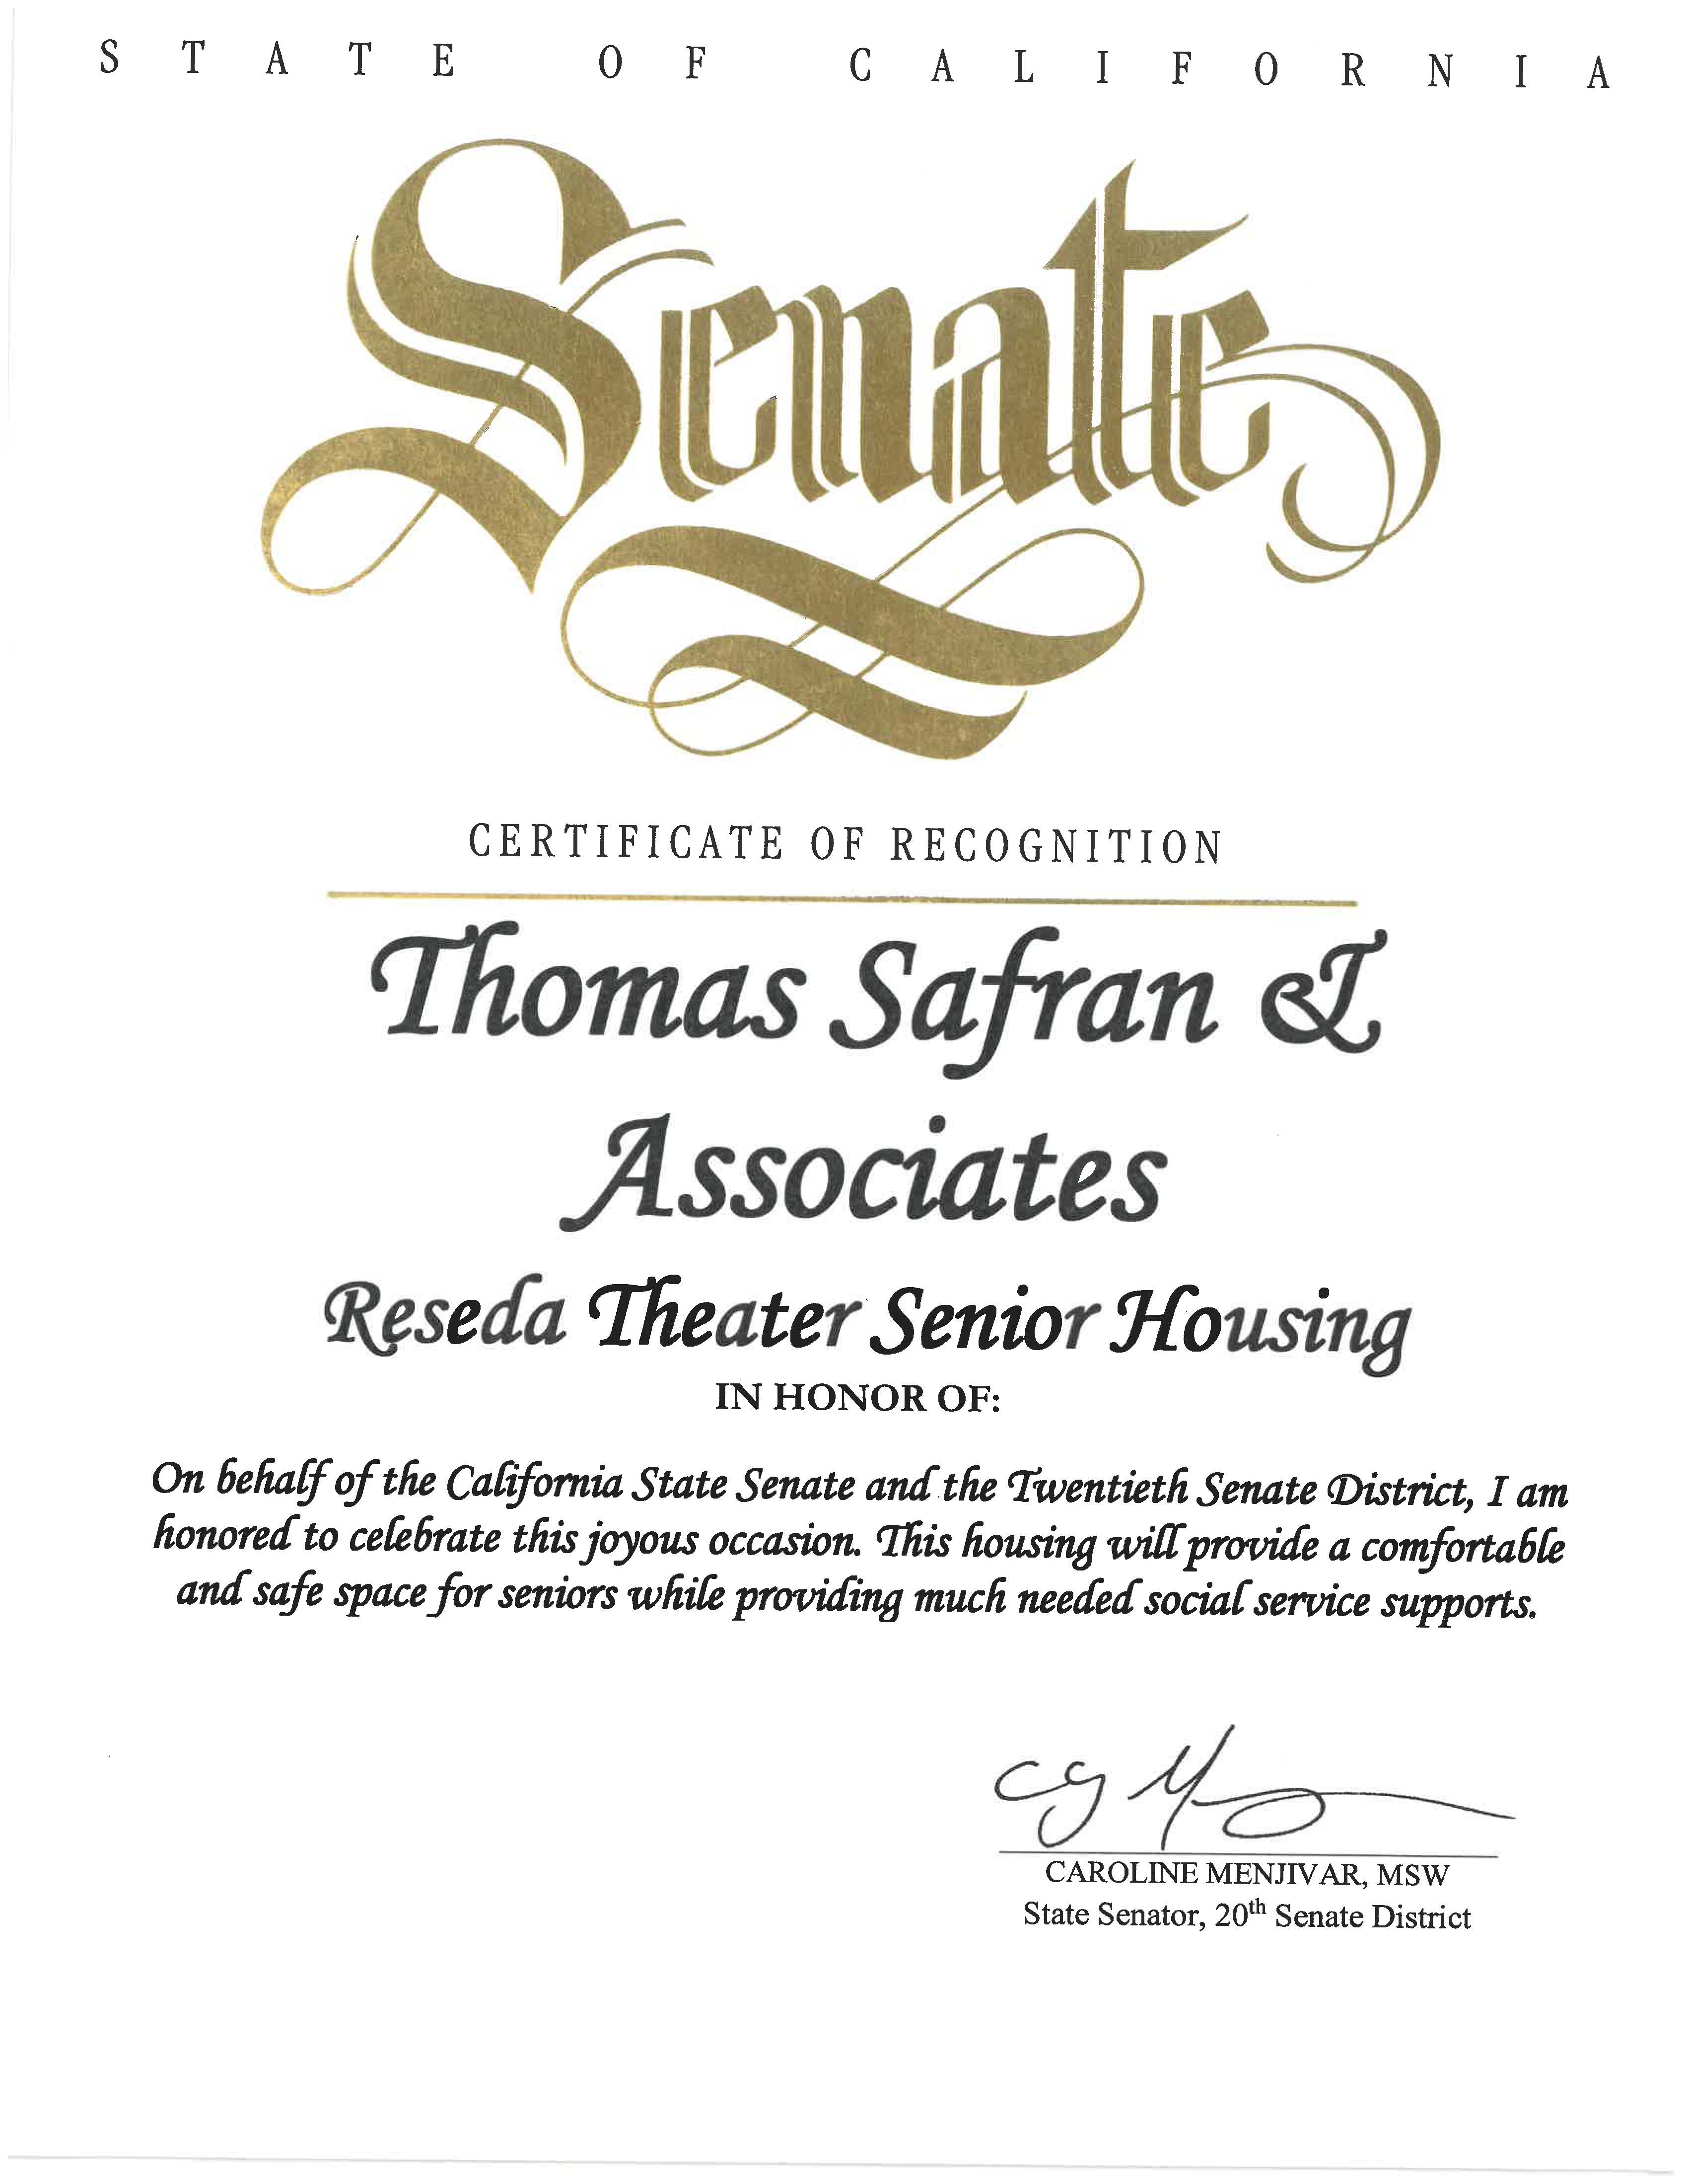 State of California Senate - Certificate of Recognition  - 
Reseda Theater Senior Housing